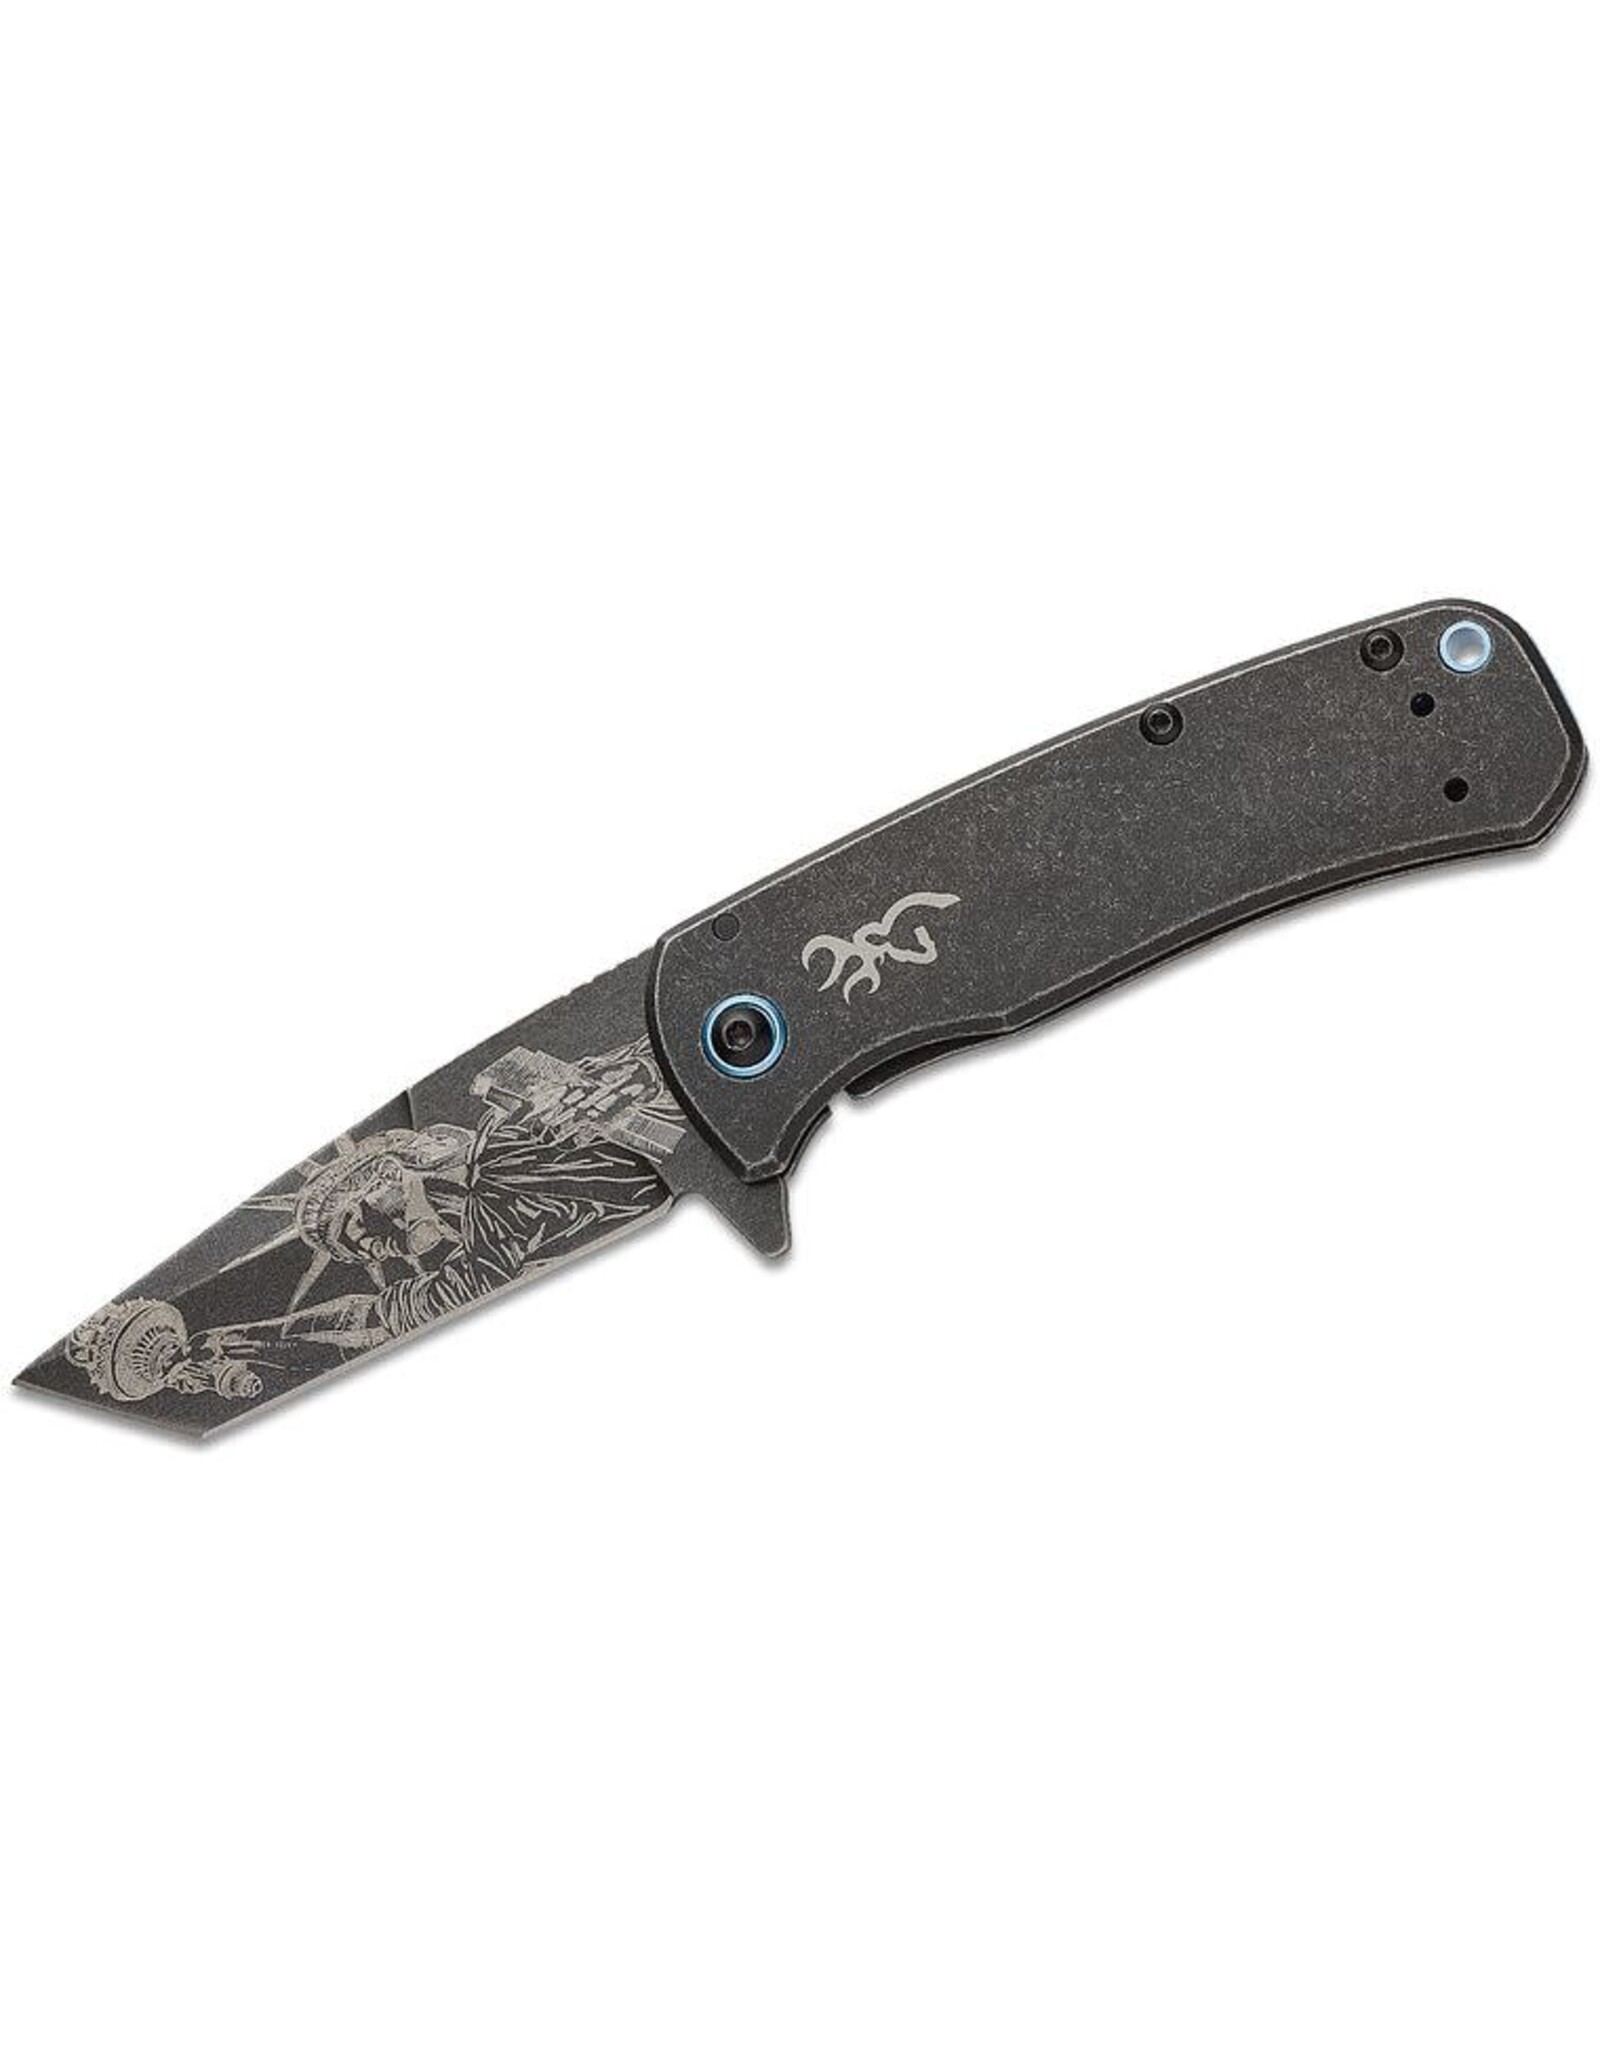 Browning Patriot Knife - 2.71" Blade